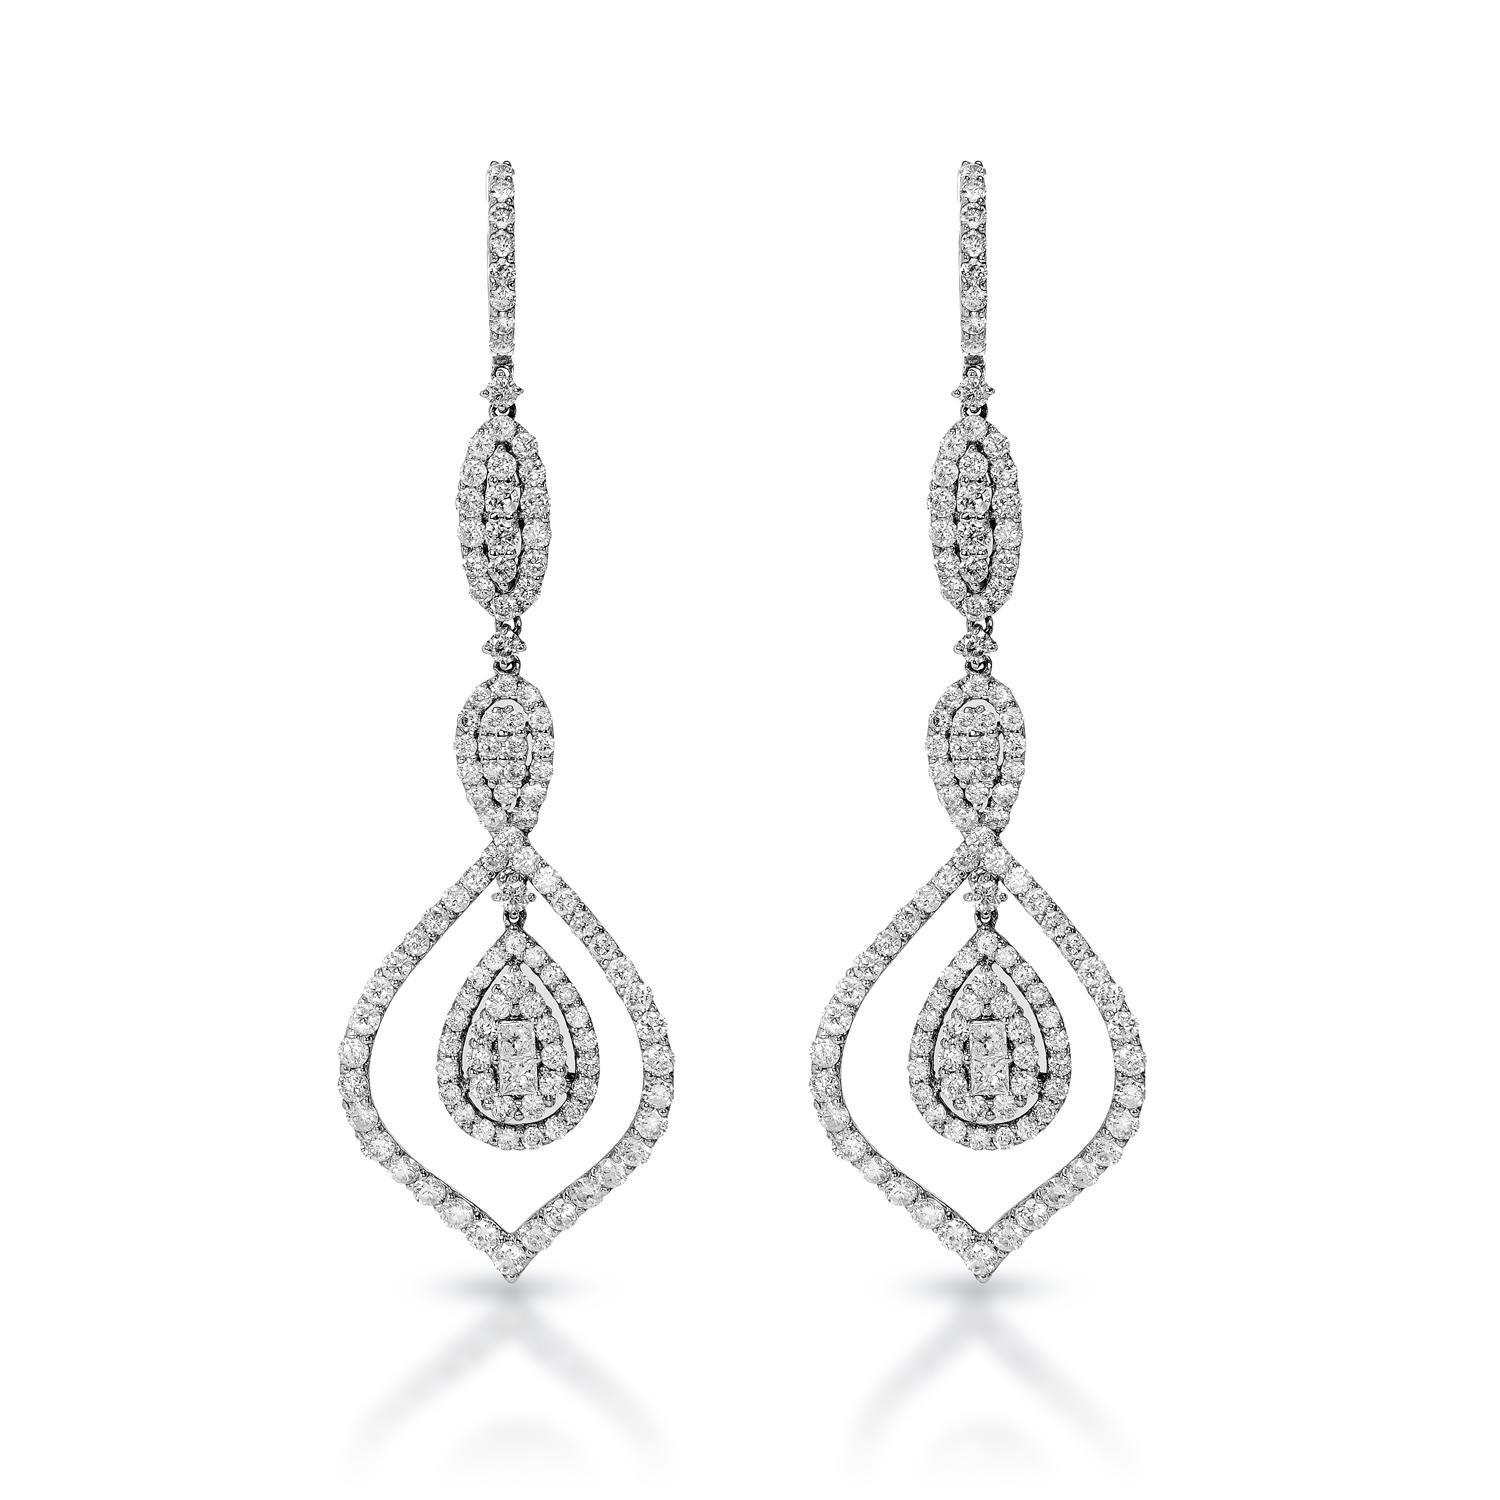 Diamond Hanging Earrings For Ladies:

Carat Weight: 5.49 Carats
Shape: Combine Mixed Shape
Metal: 18Karat White Gold 11.00 Grams
Style: Hanging Earrings